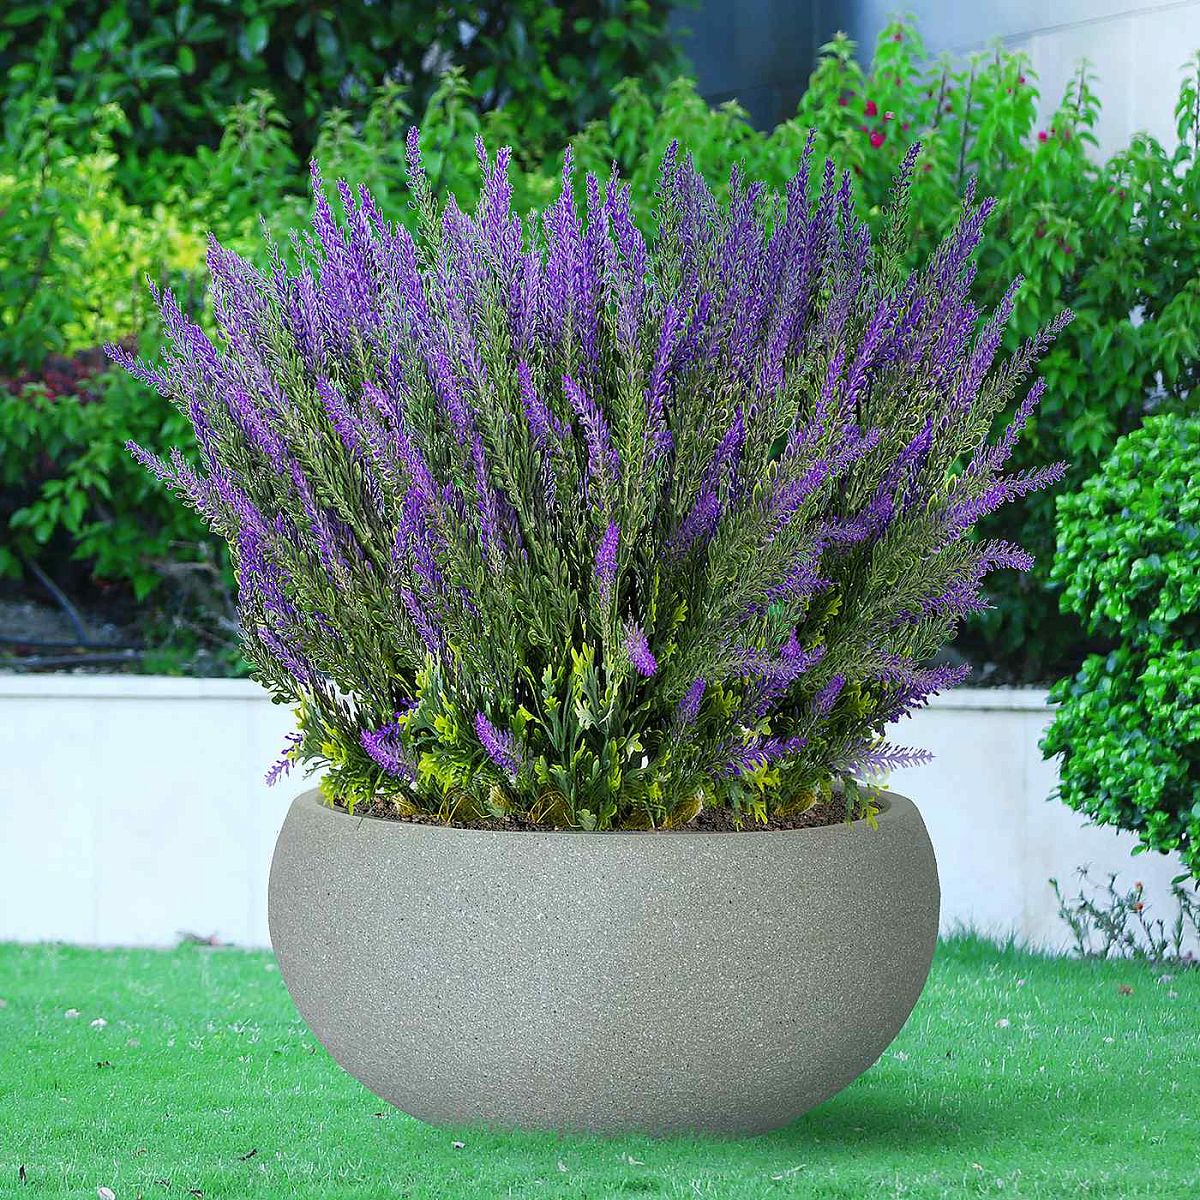 Textured Concrete Effect Bowl Outdoor Planter by Idealist Lite